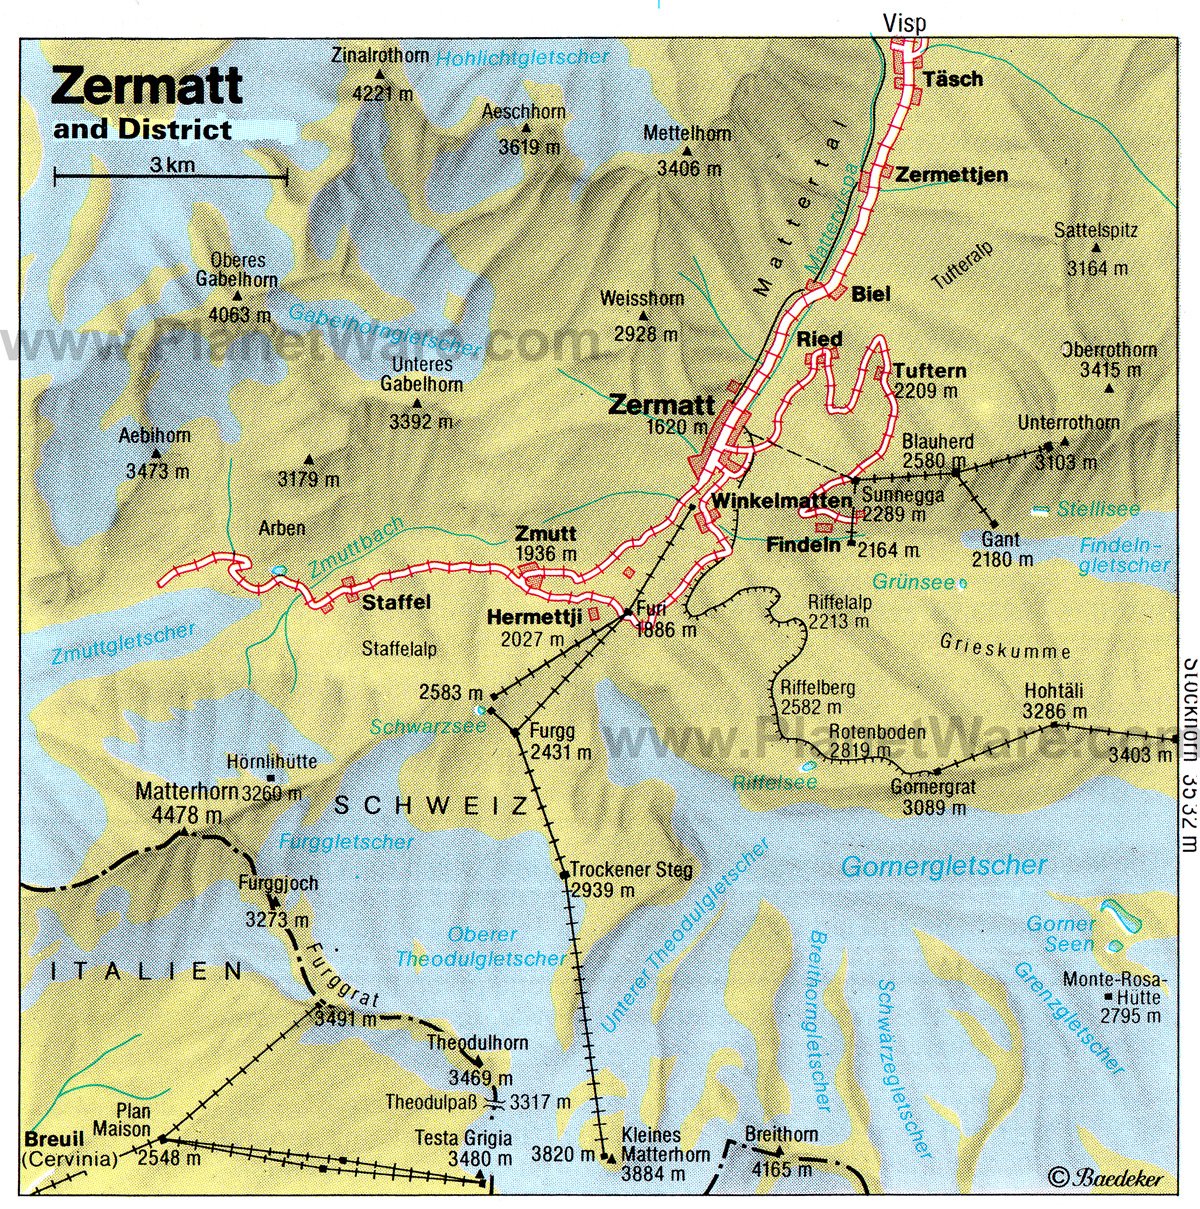 Zermatt and District Map - Tourist Attractions